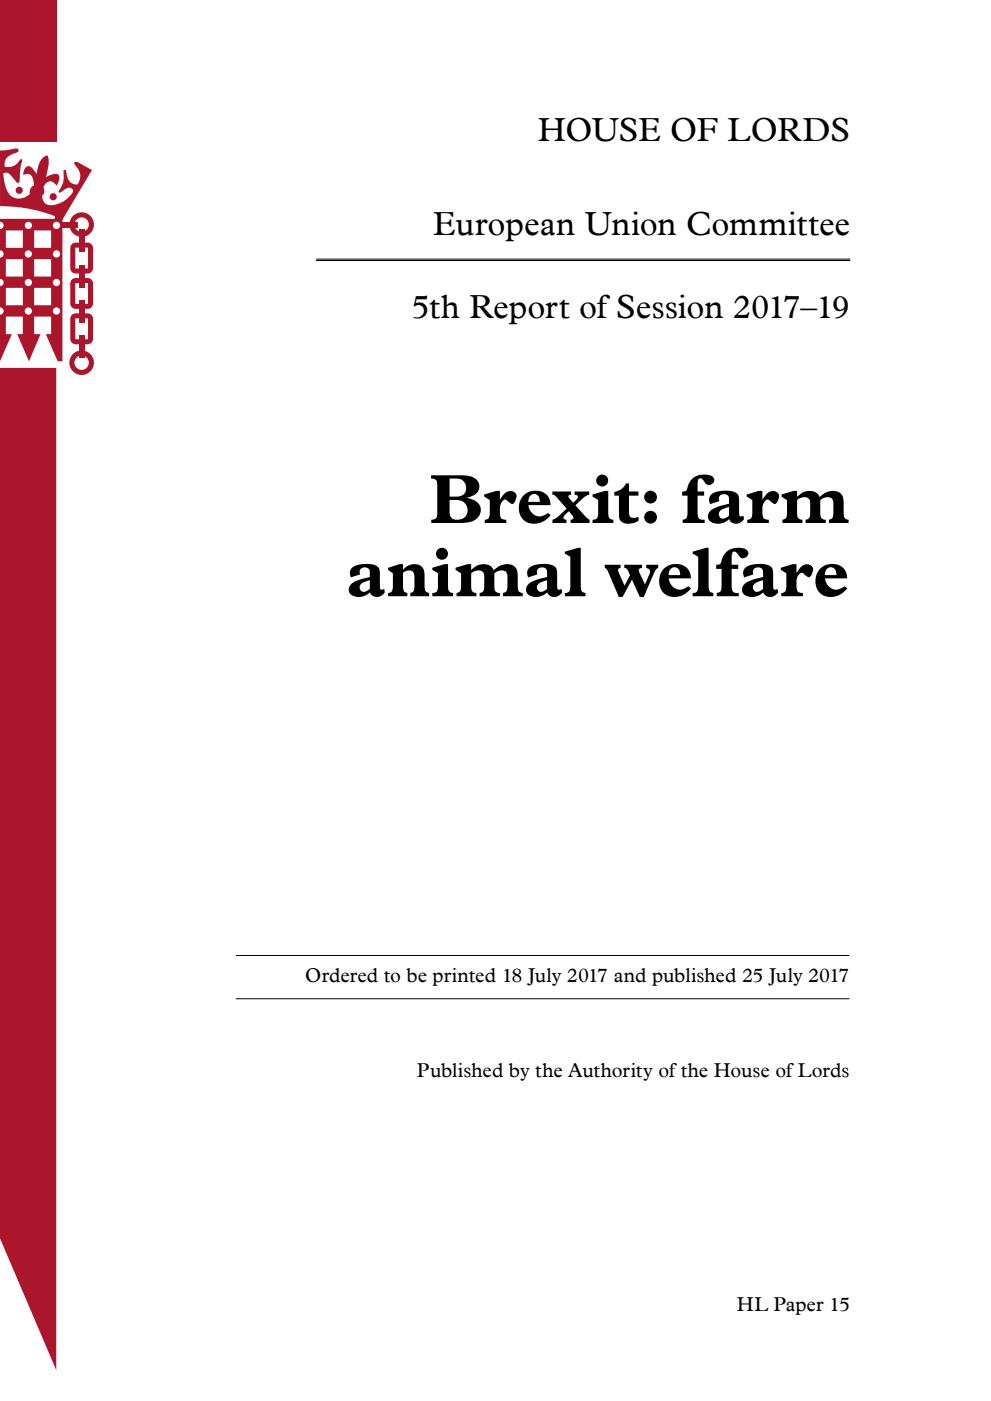 European Union Committee 5th Report. Brexit: farm animal welfare